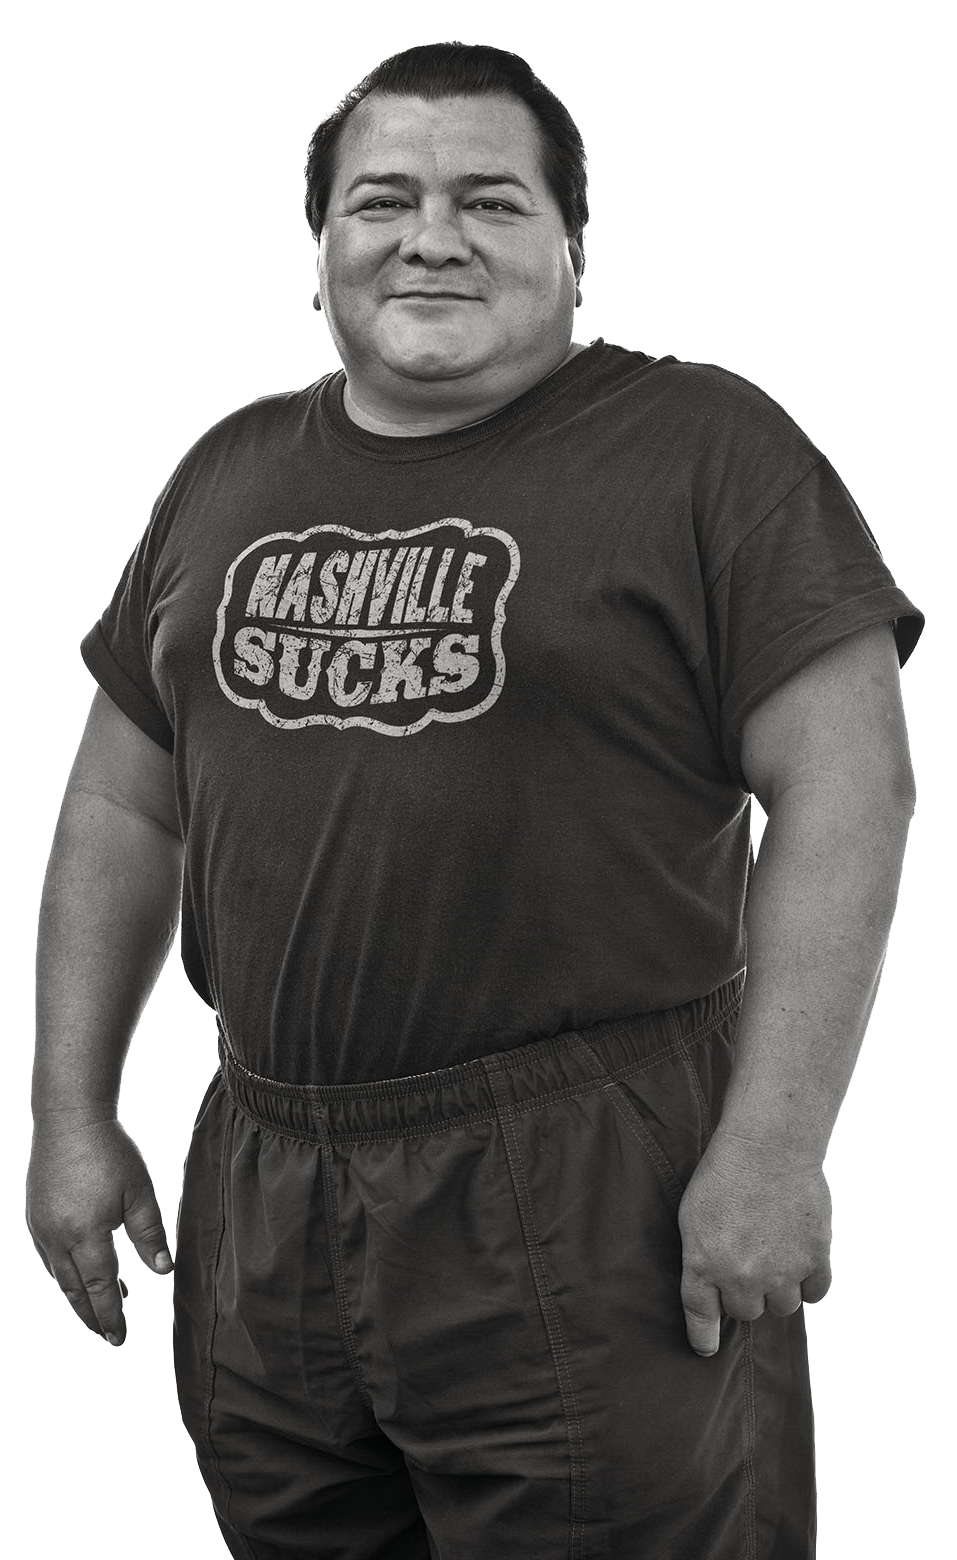 A man in a shirt reading 'Nashville Sucks' poses